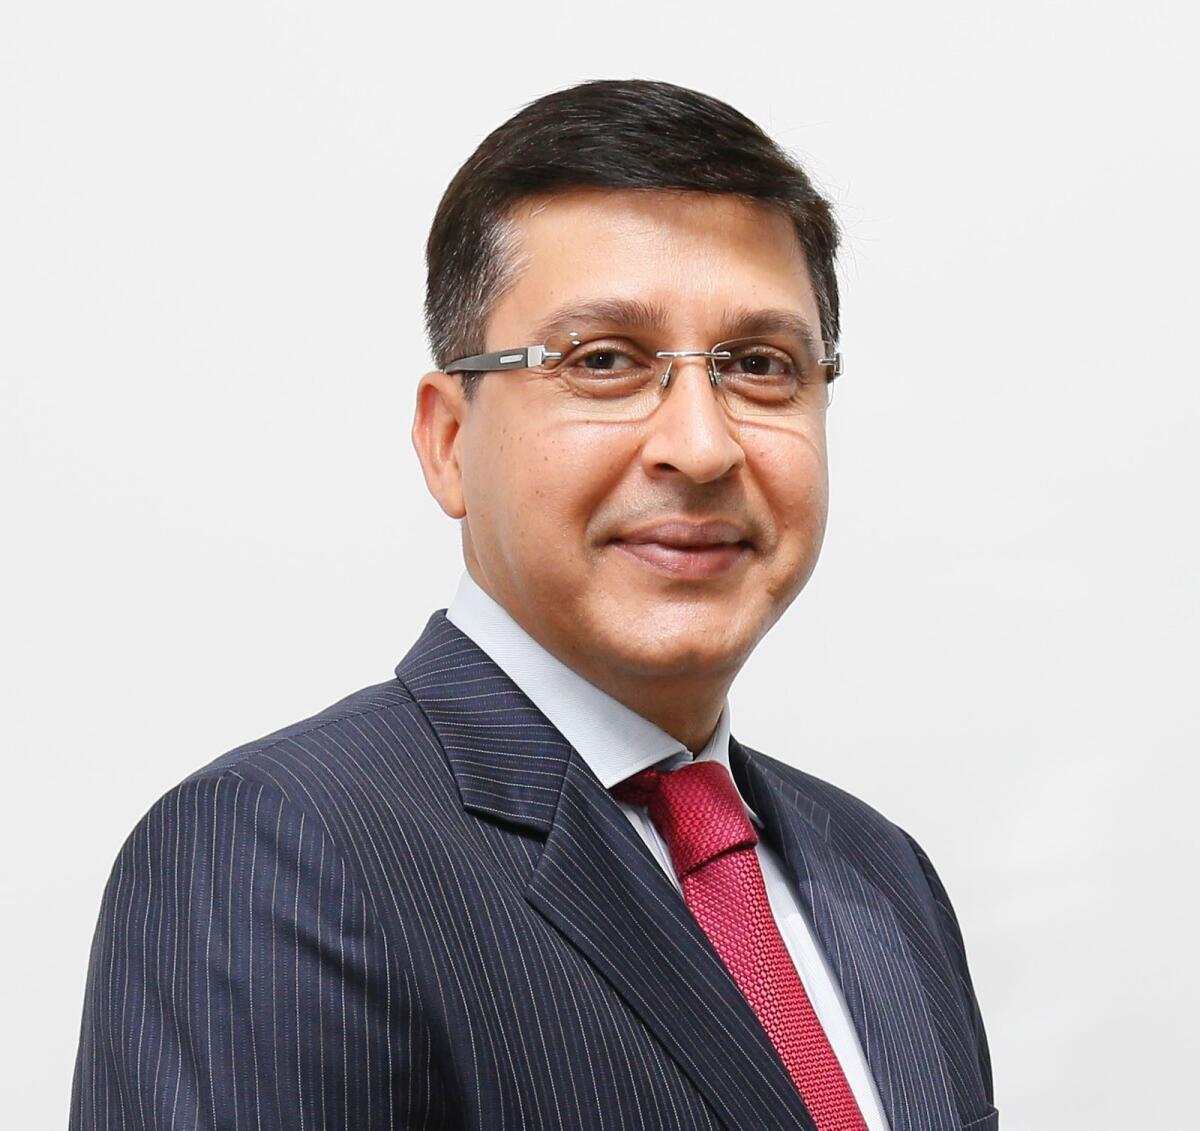 Nitin Chauhan, director of Landsmith Real Estate.